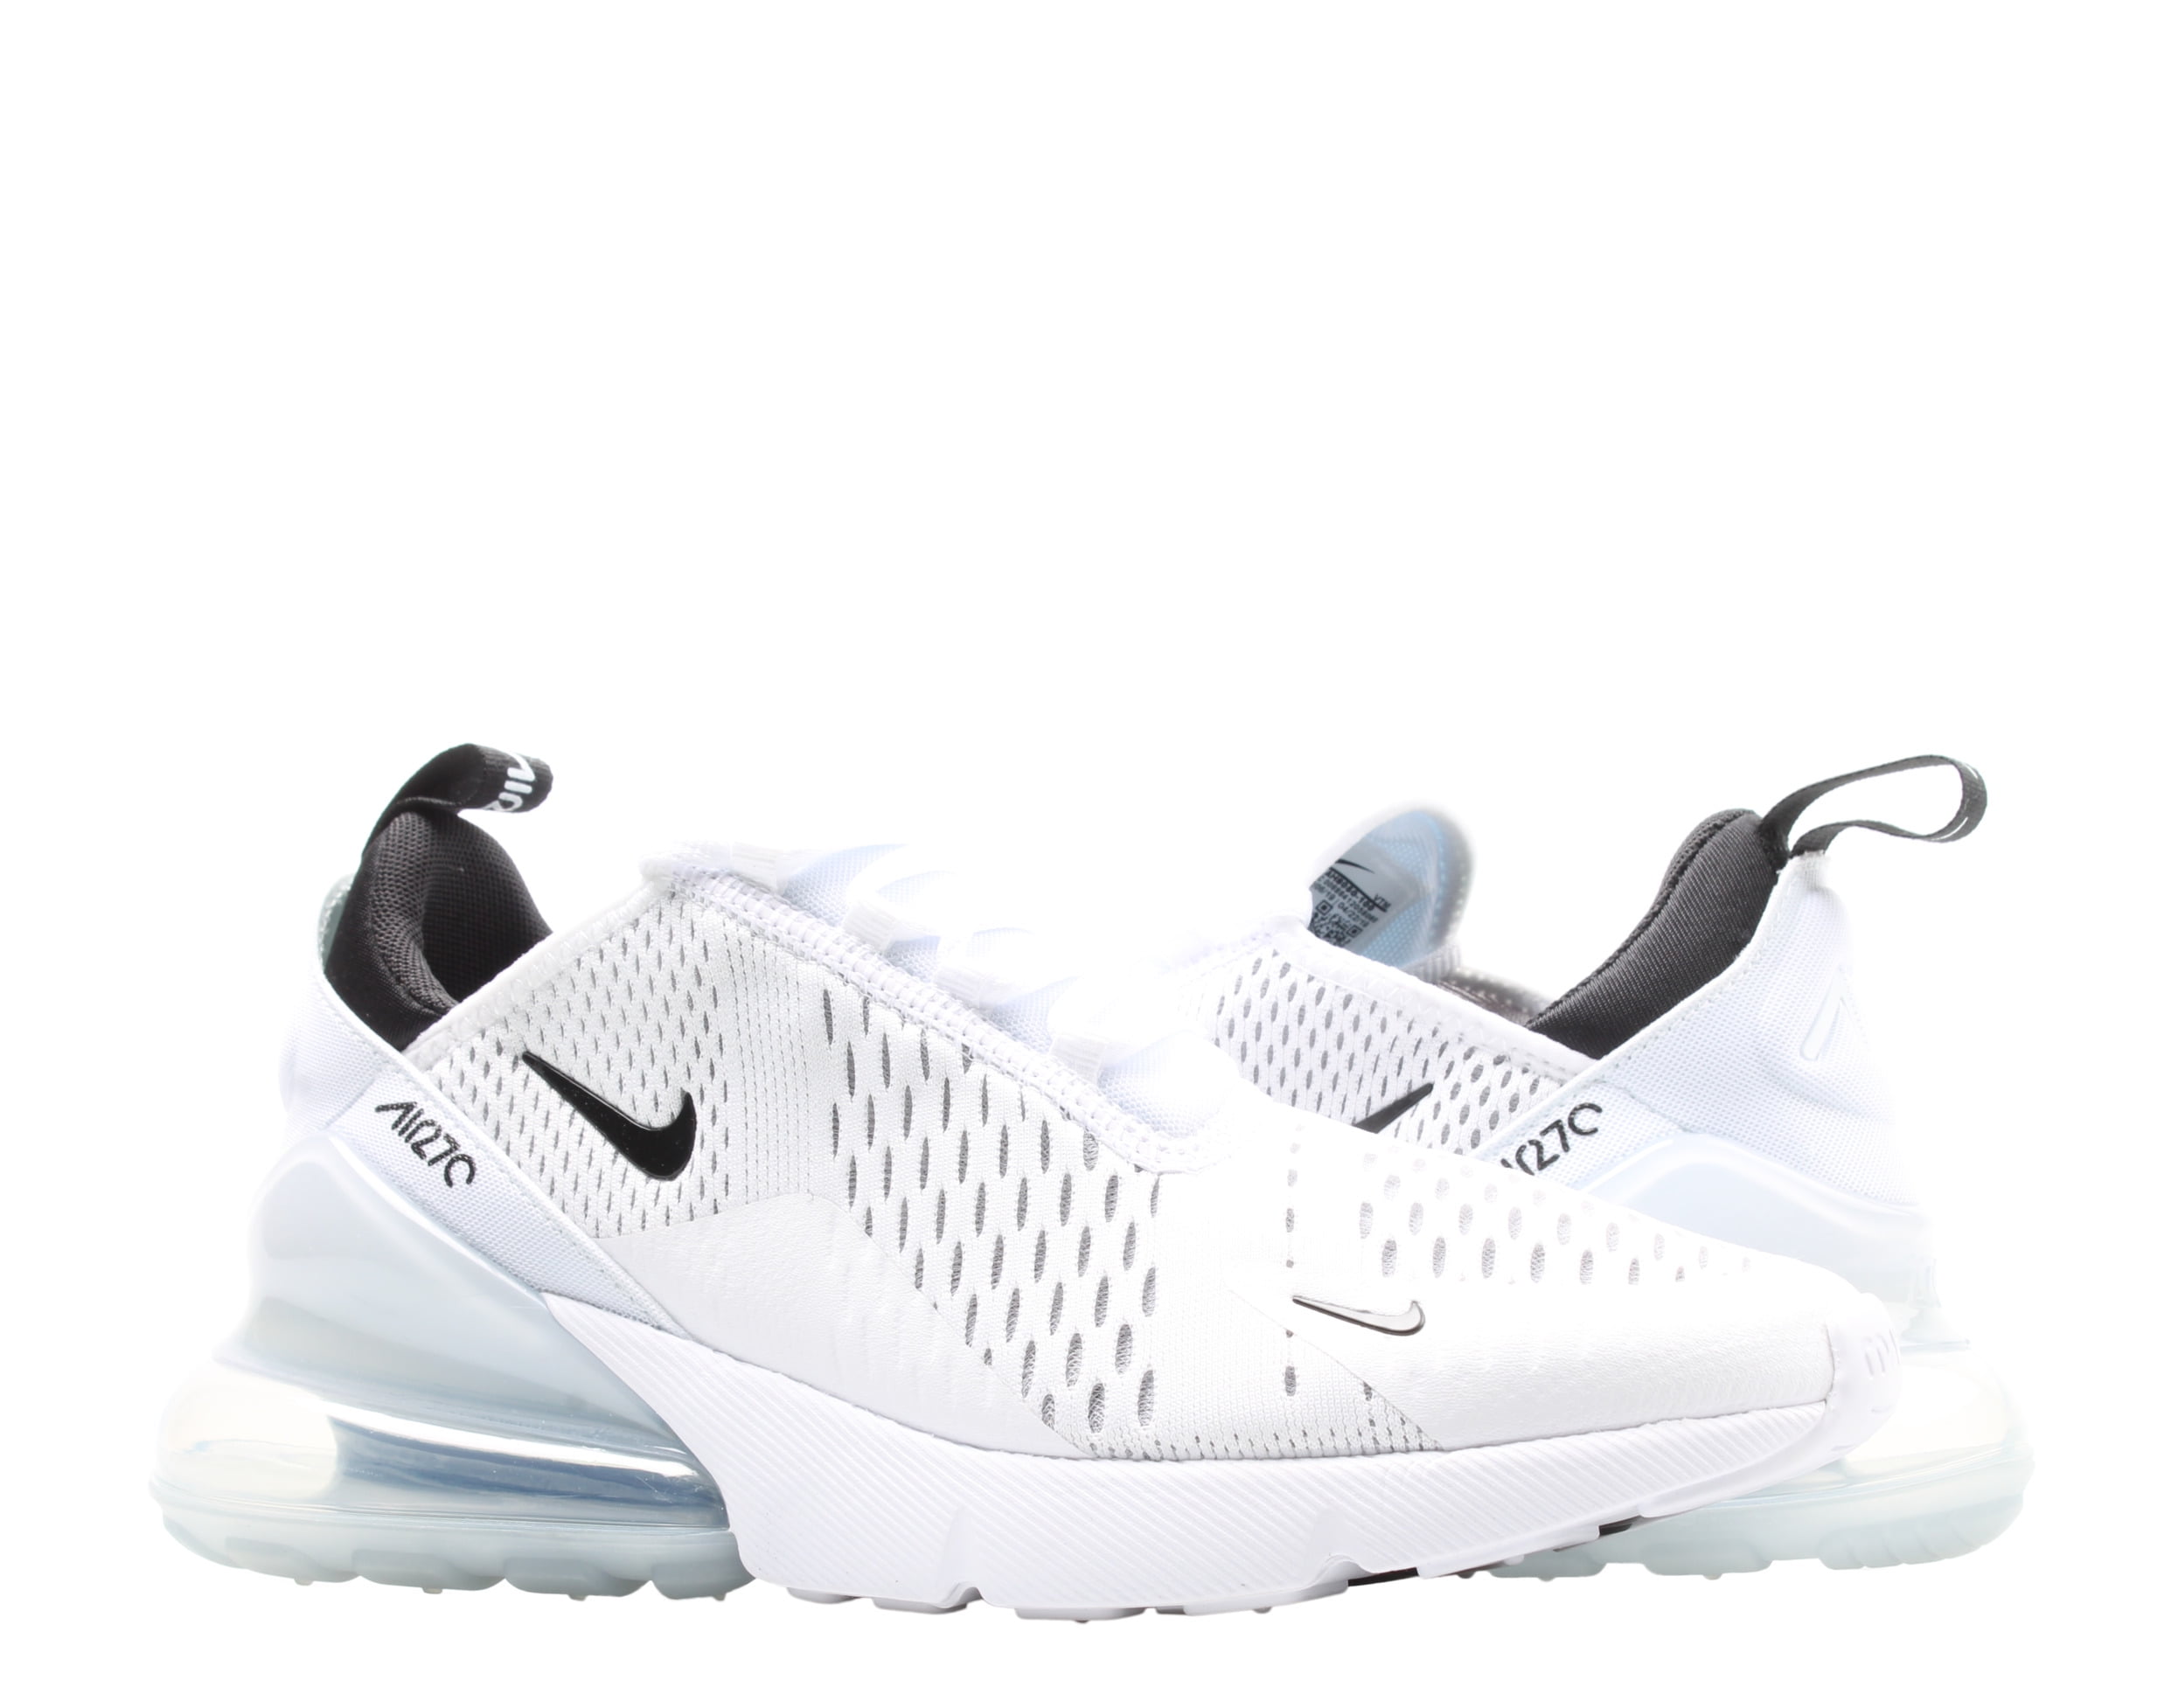 Beweren Voorafgaan roman Nike Air Max 270 Men's Running Shoes White/Black-White AH8050-100 -  Walmart.com